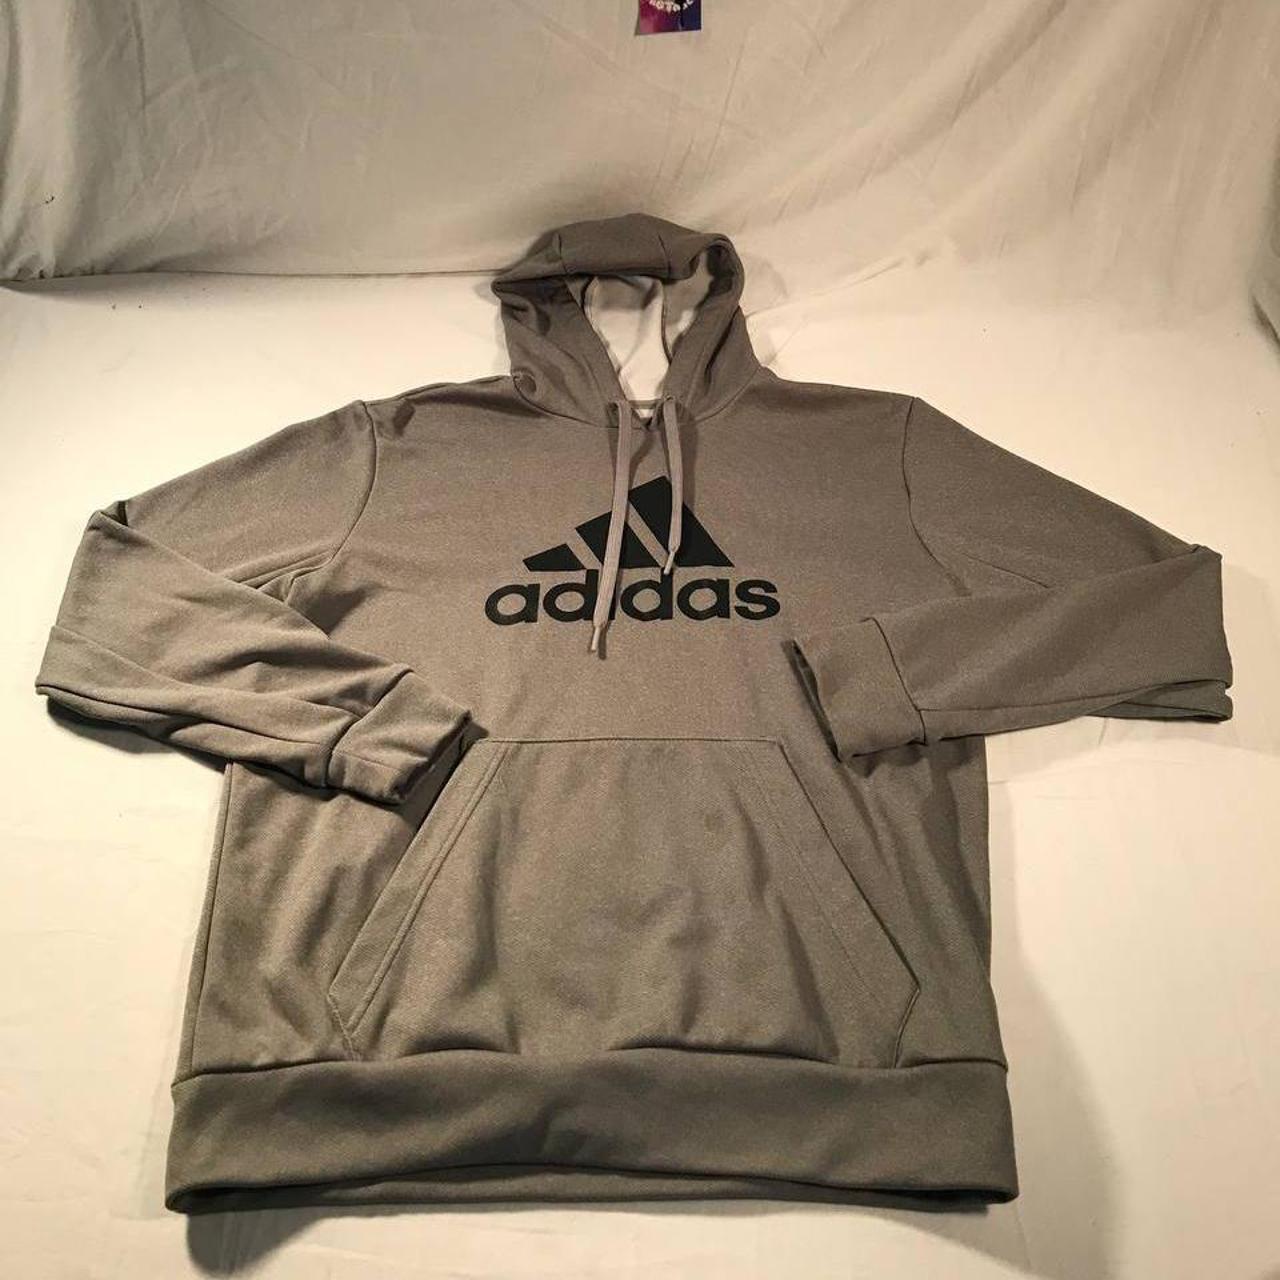 Adidas Men's Grey and Black Sweatshirt | Depop